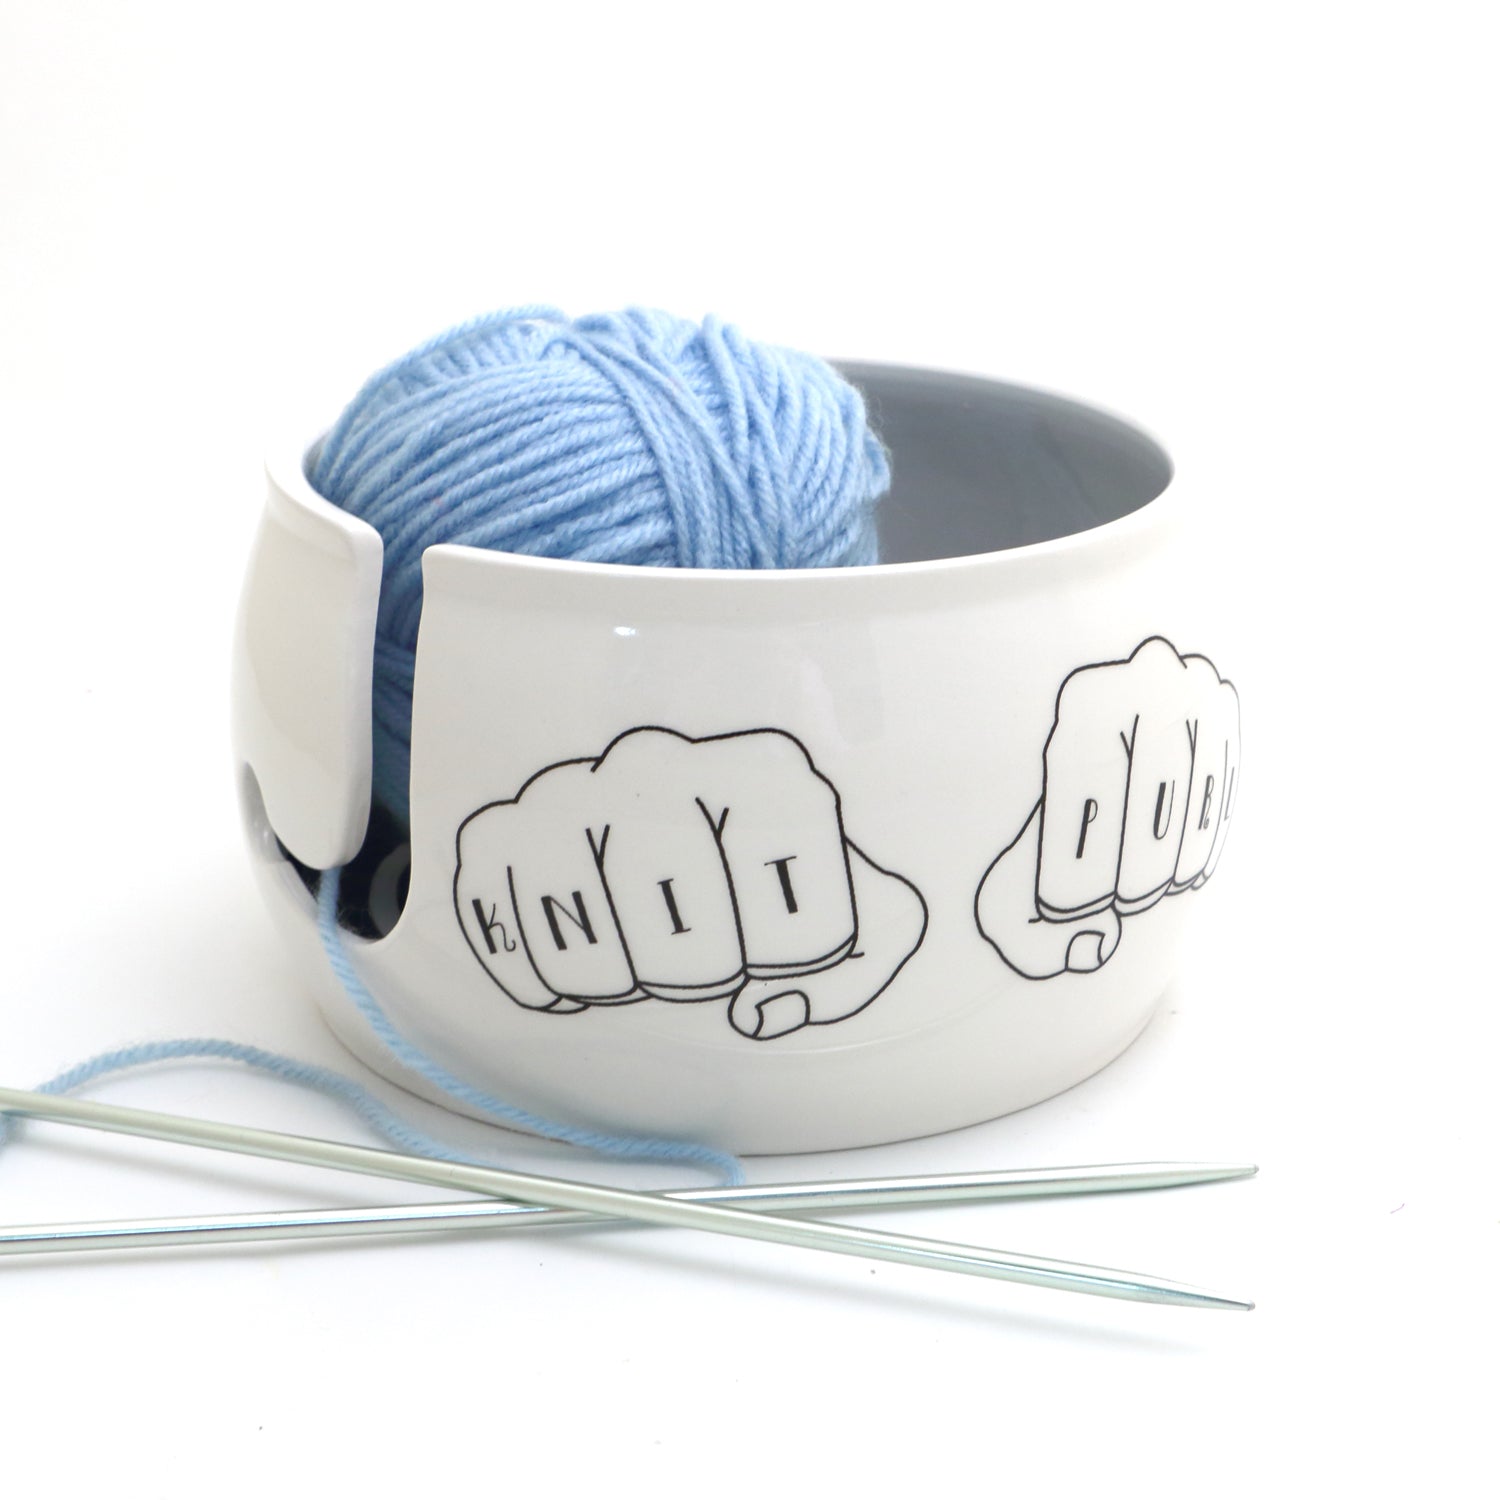 Wholesale ceramic knitting yarn holder for Recreation and Hobby 